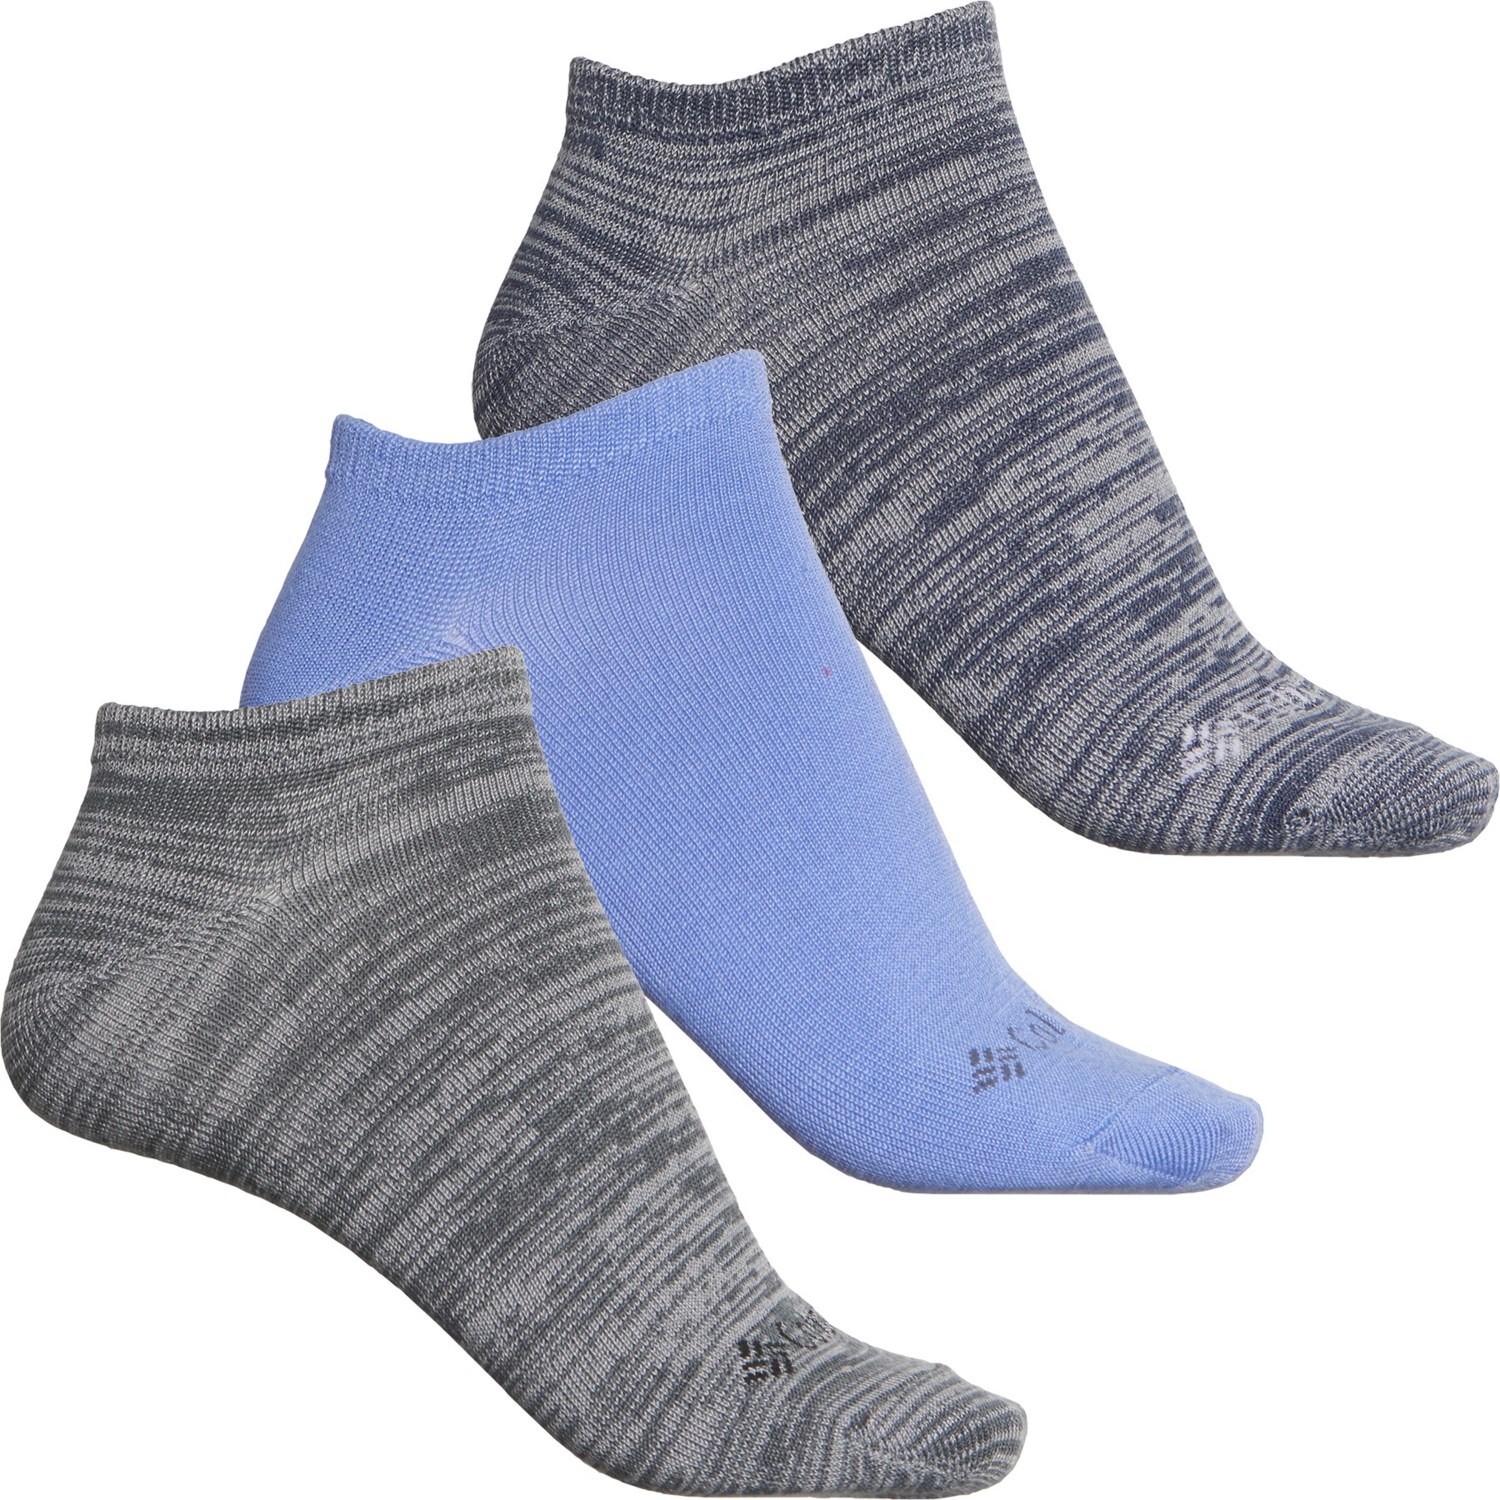 COLUMBIA Basic No-Show Socks (For Women) - Save 40%